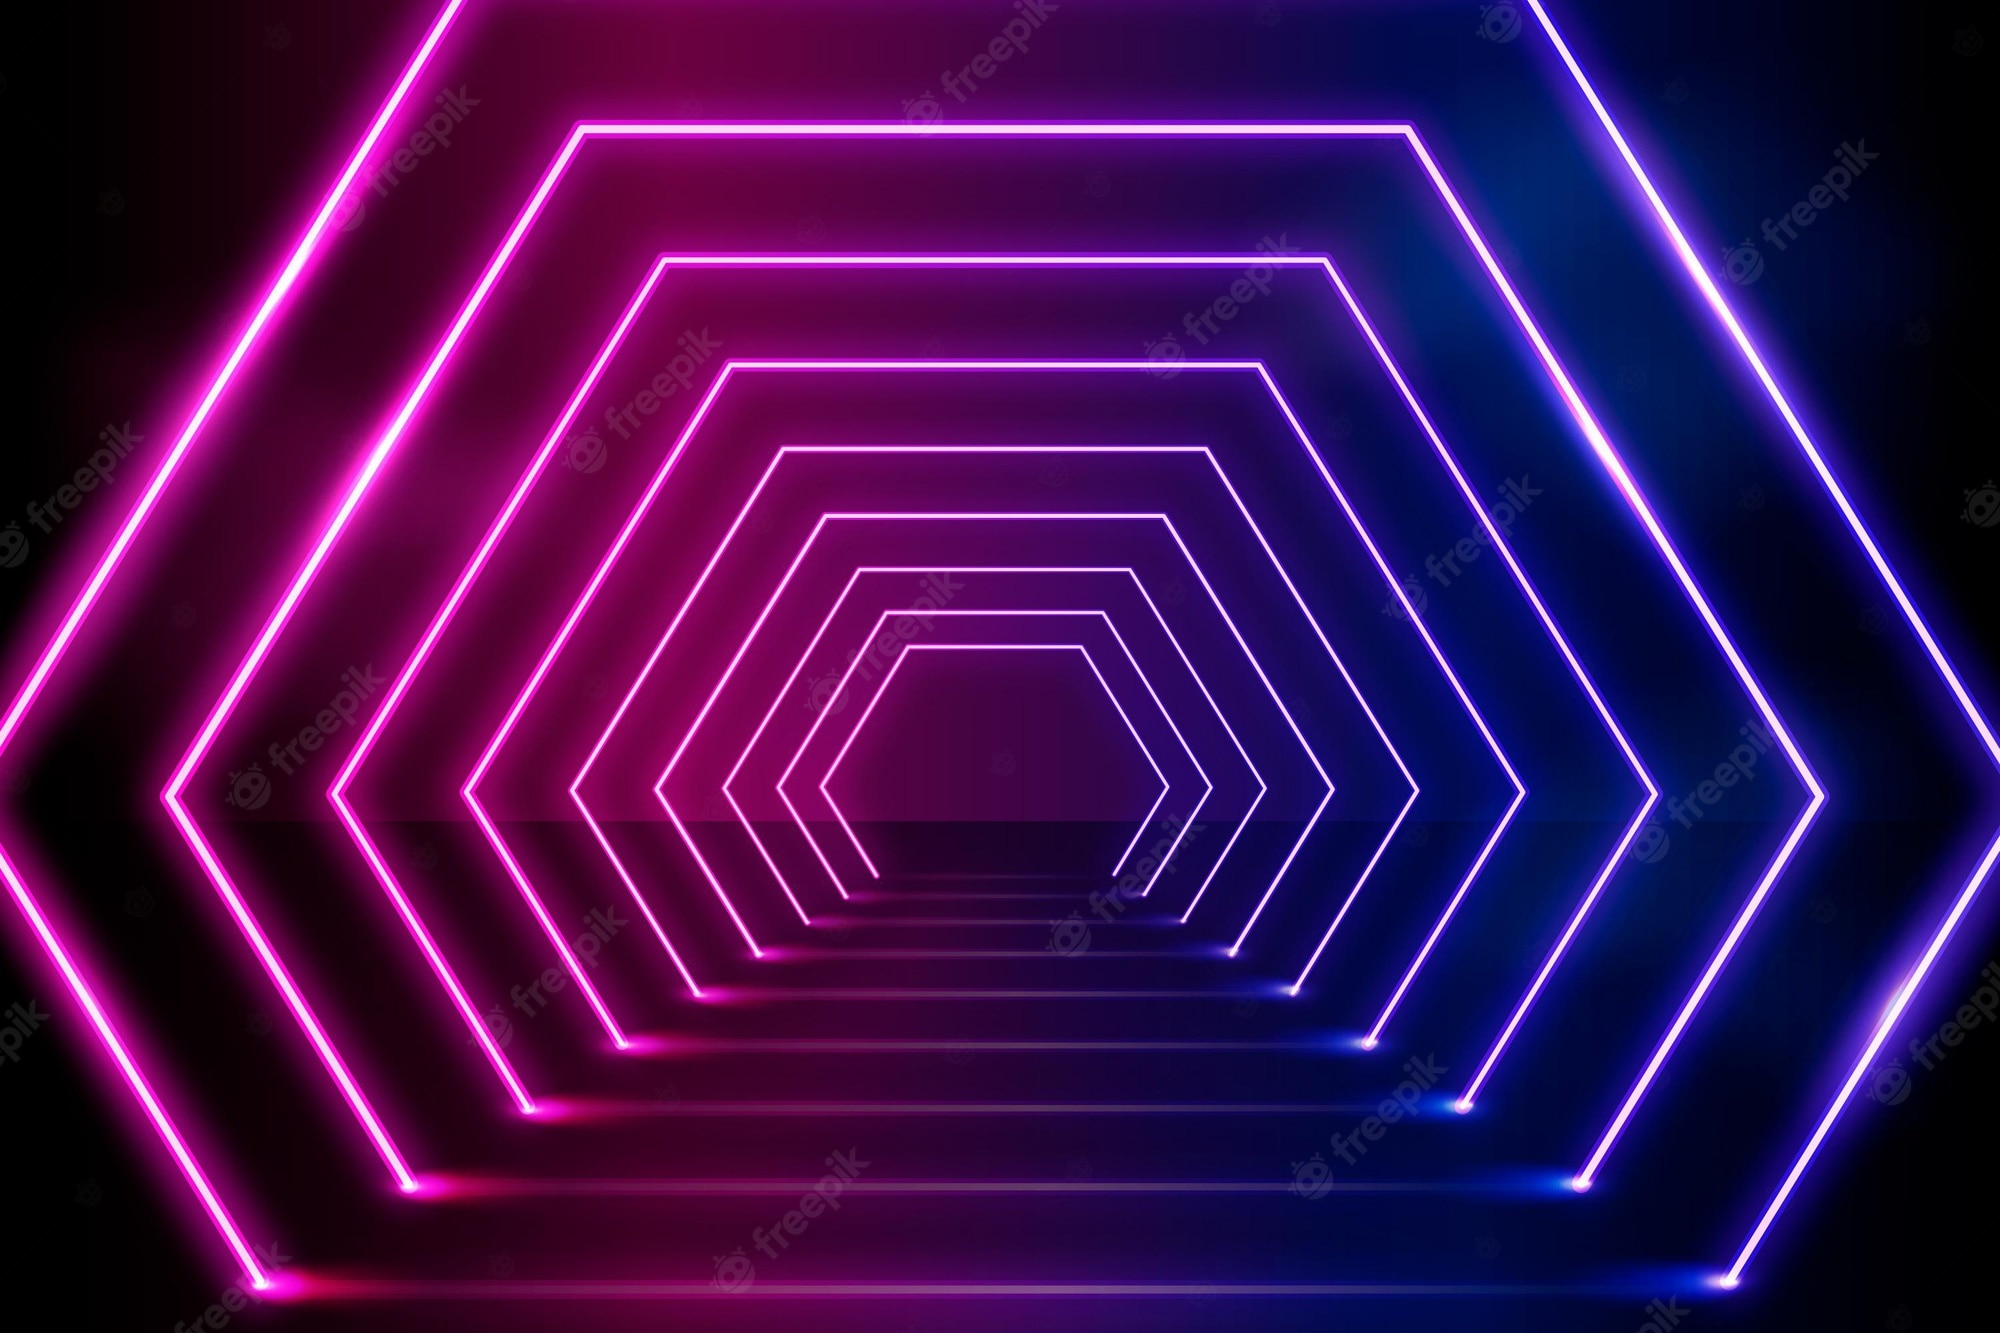 Neon Light Backgrounds